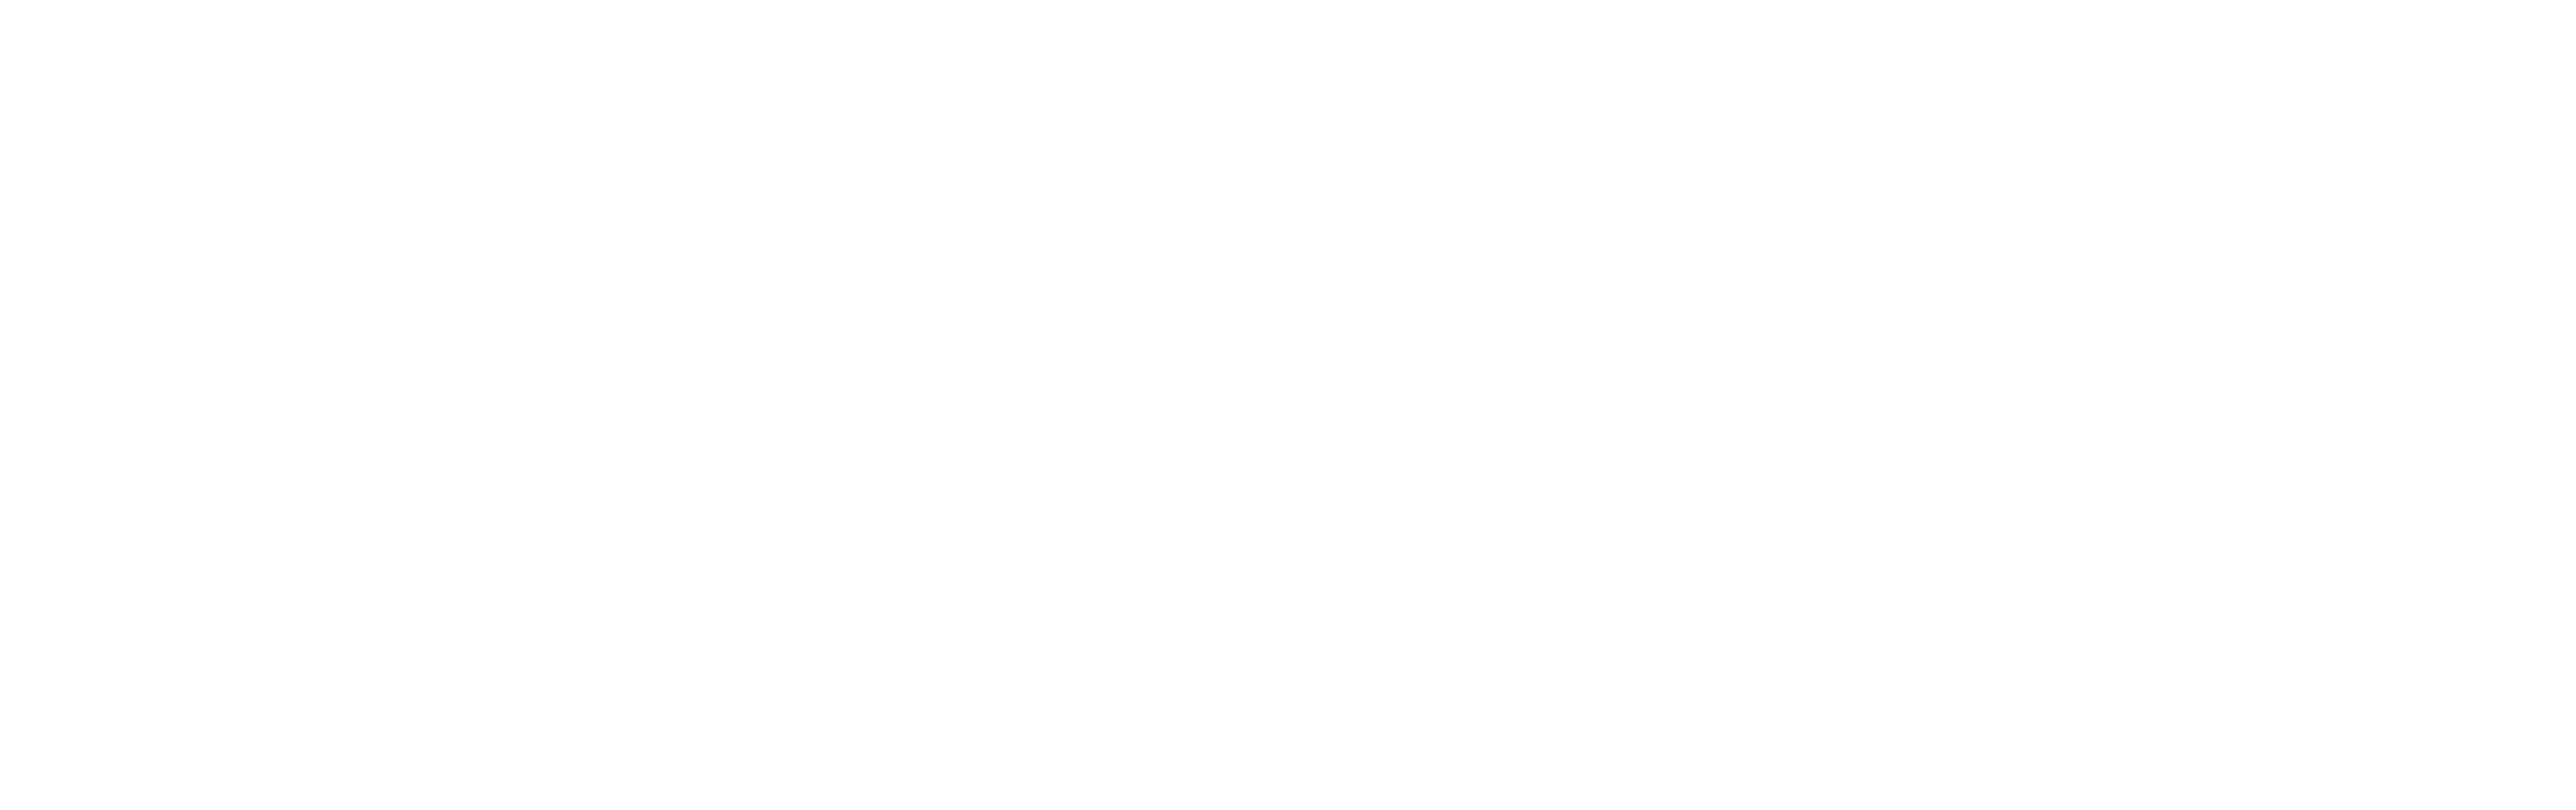 Owletcare